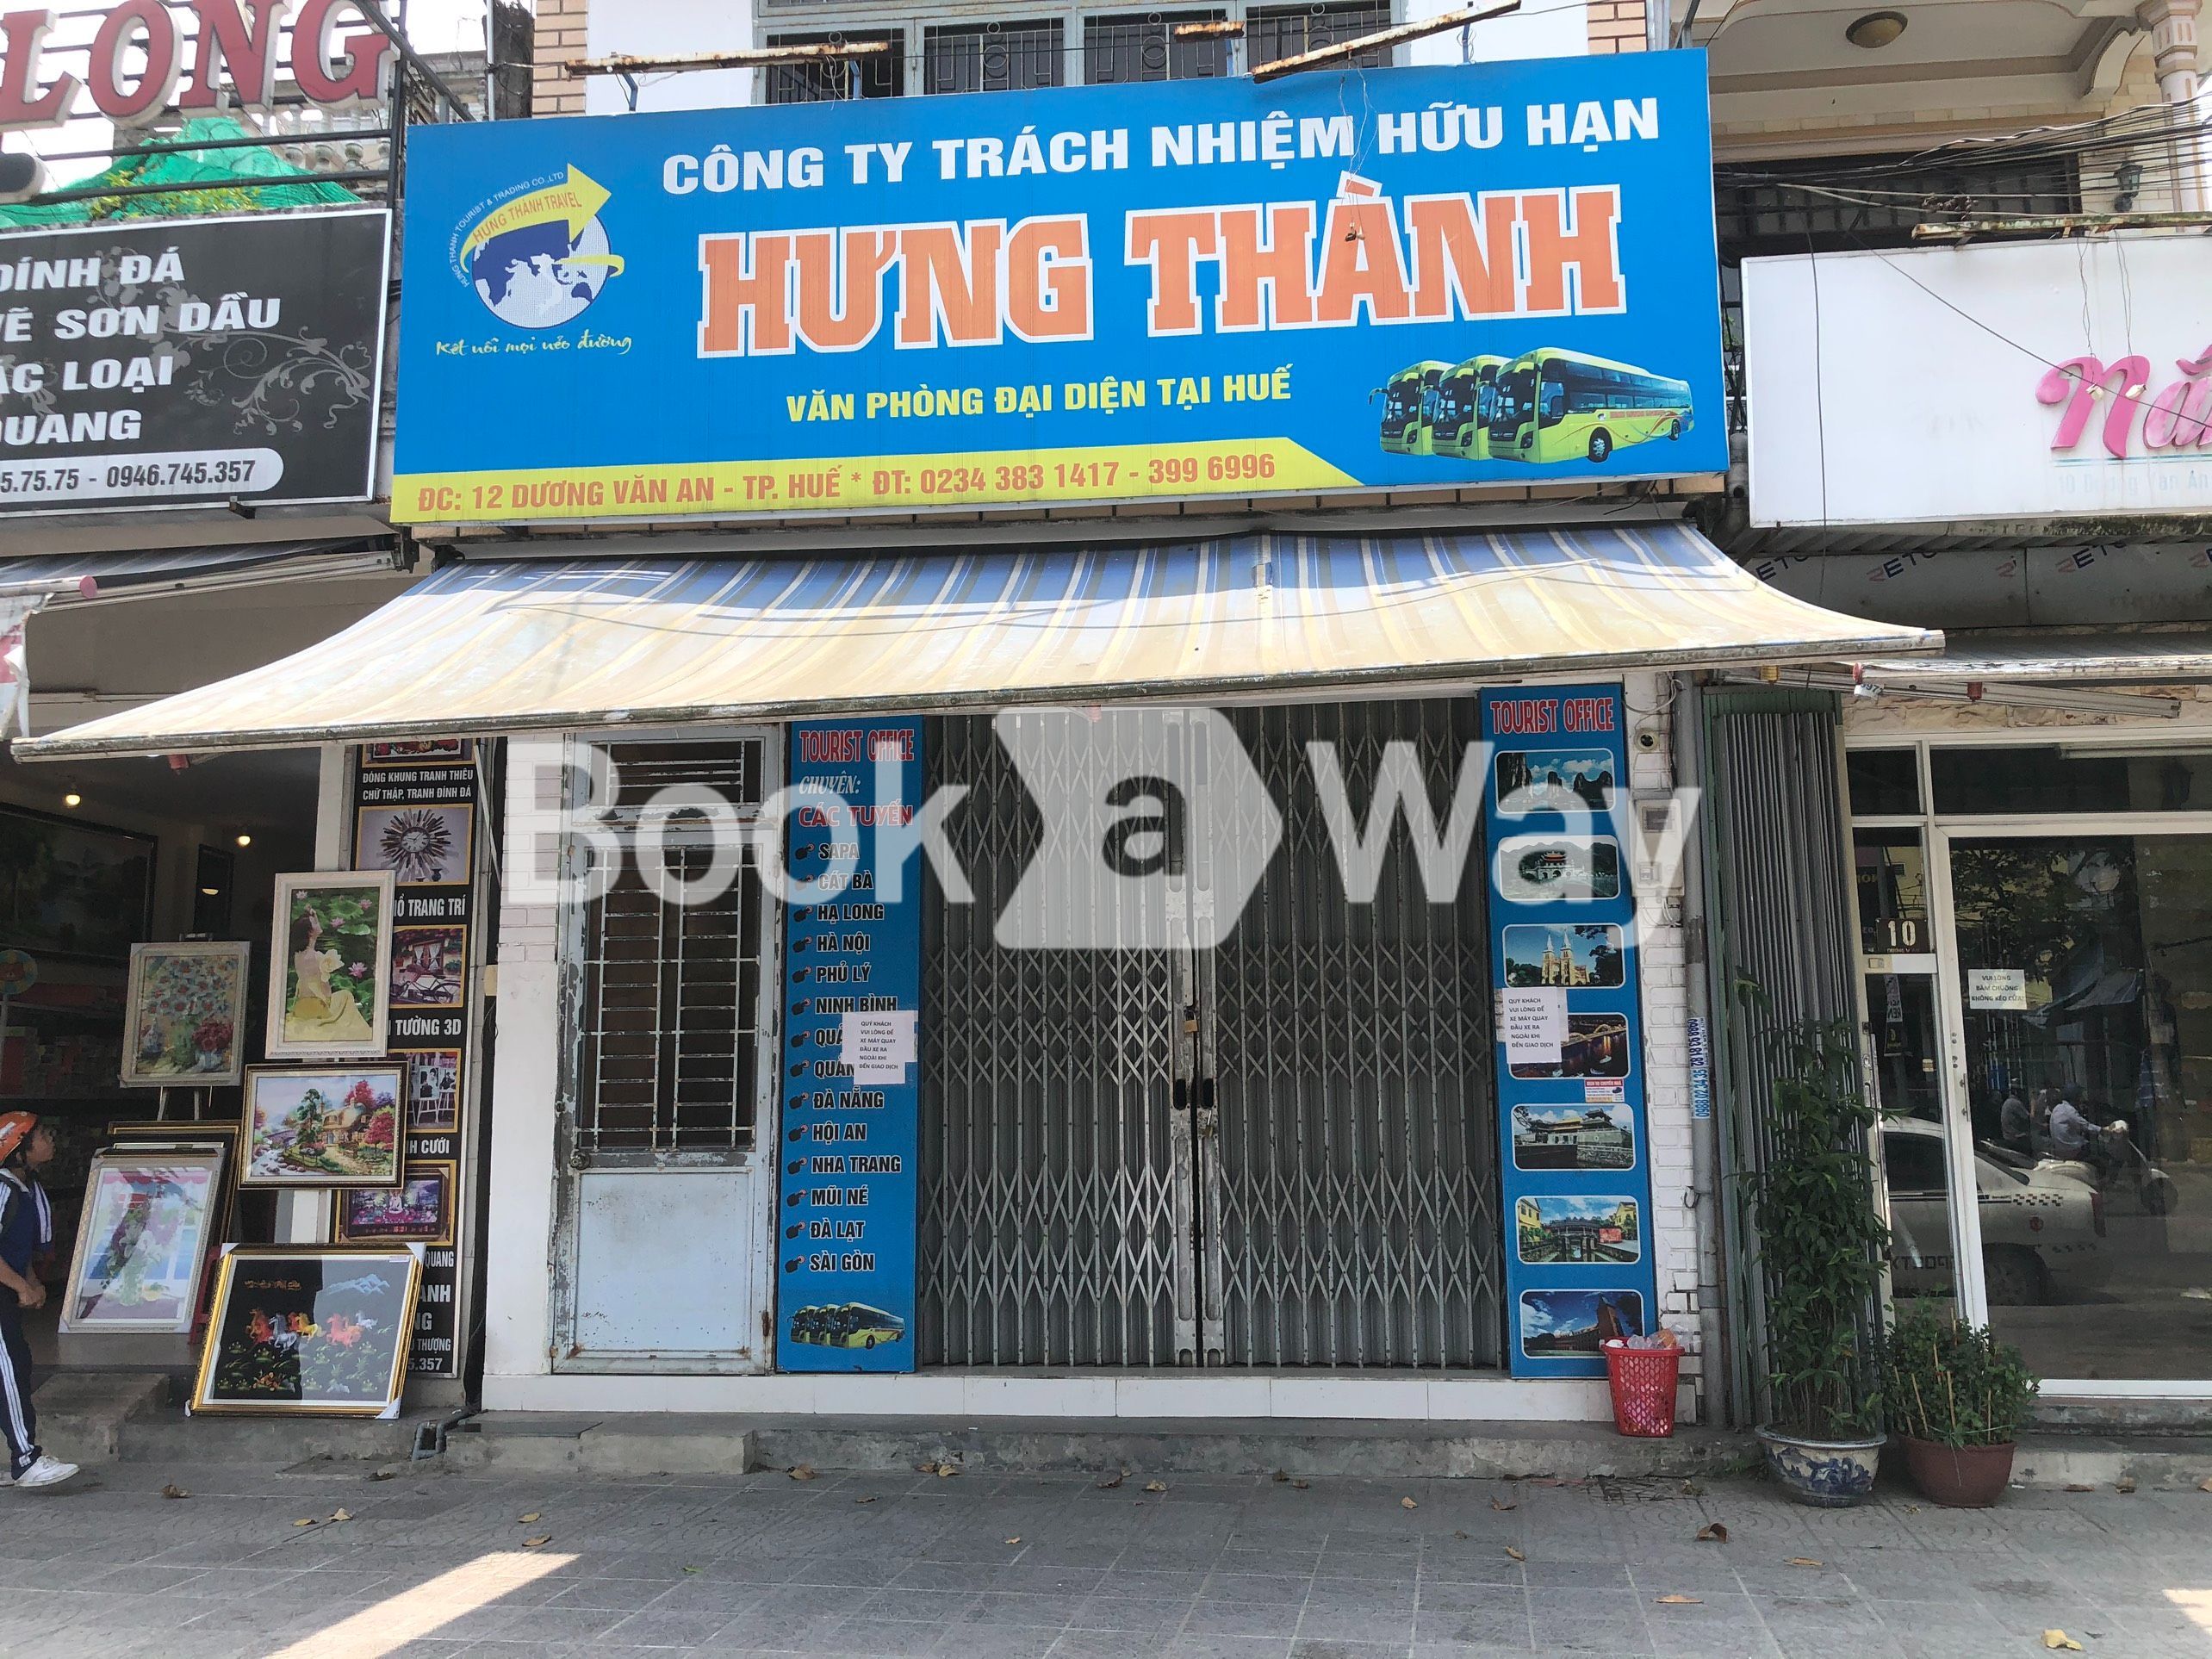 Hung Thanh office Hue